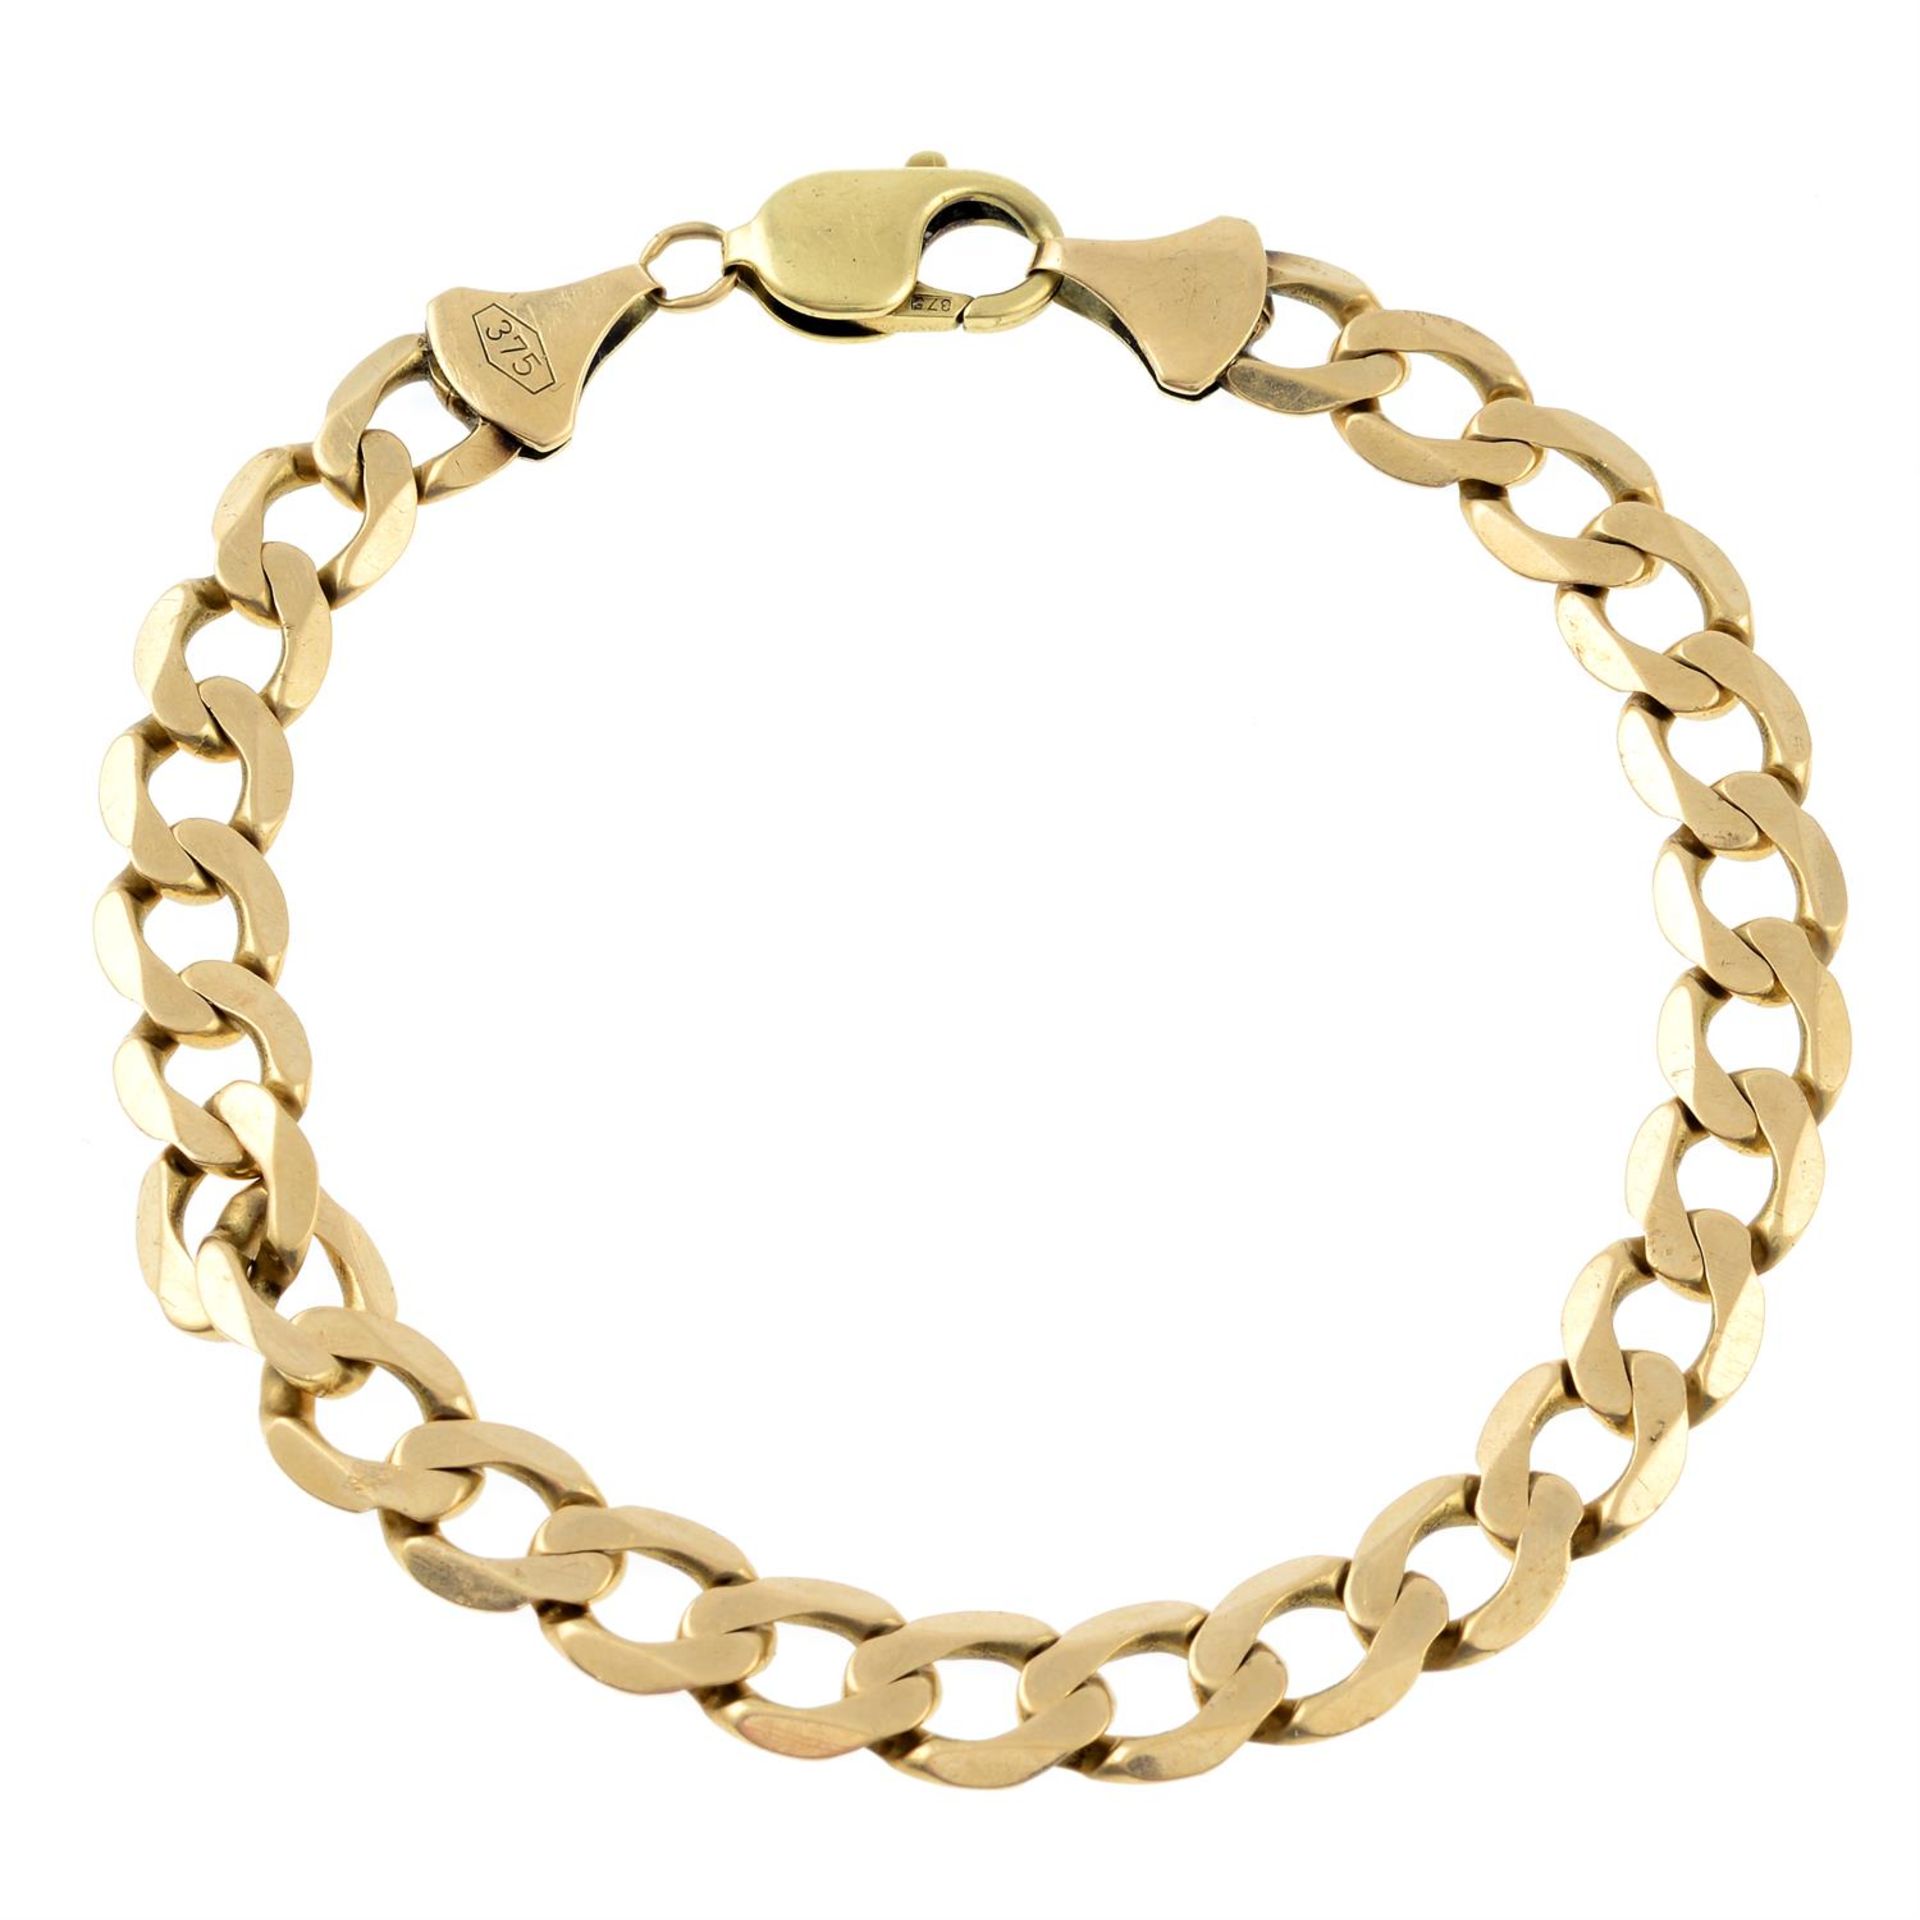 (68692) A 9ct gold curb-link bracelet.